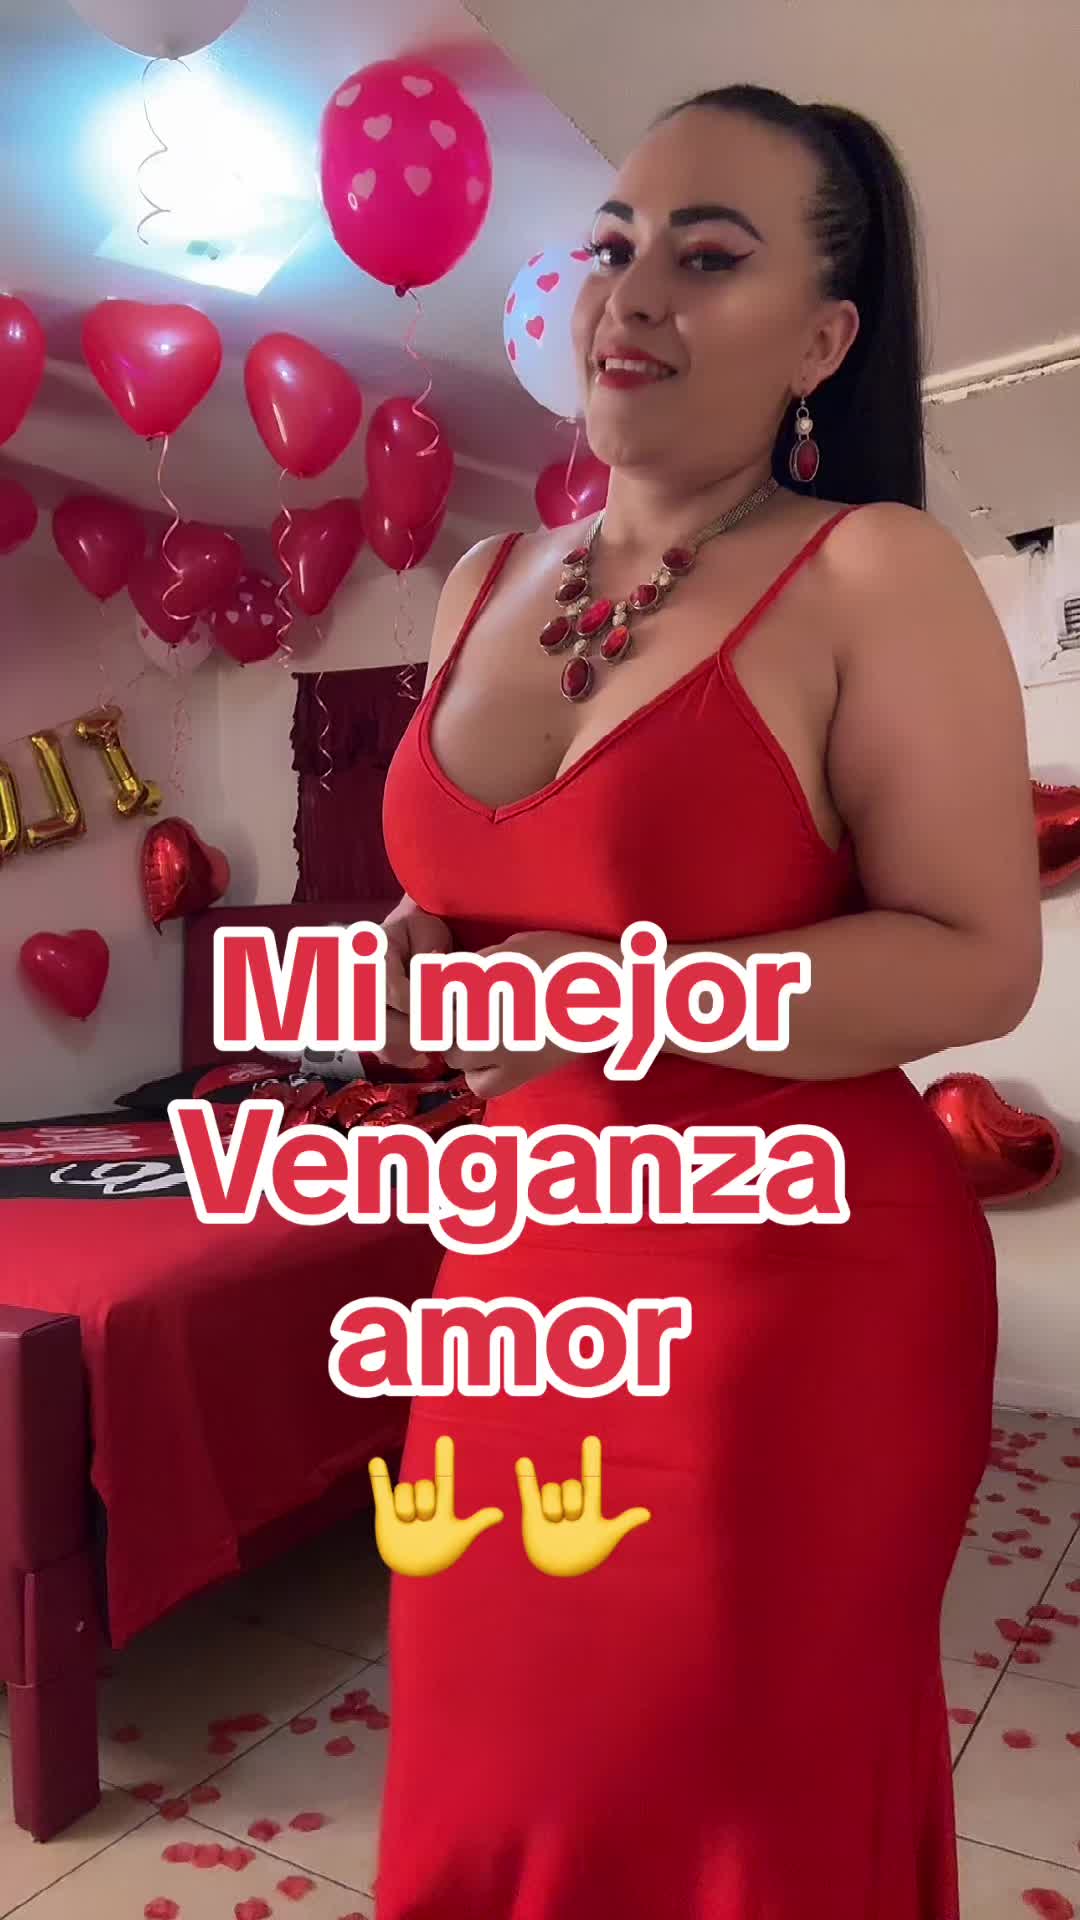 @Lesbi Mejía